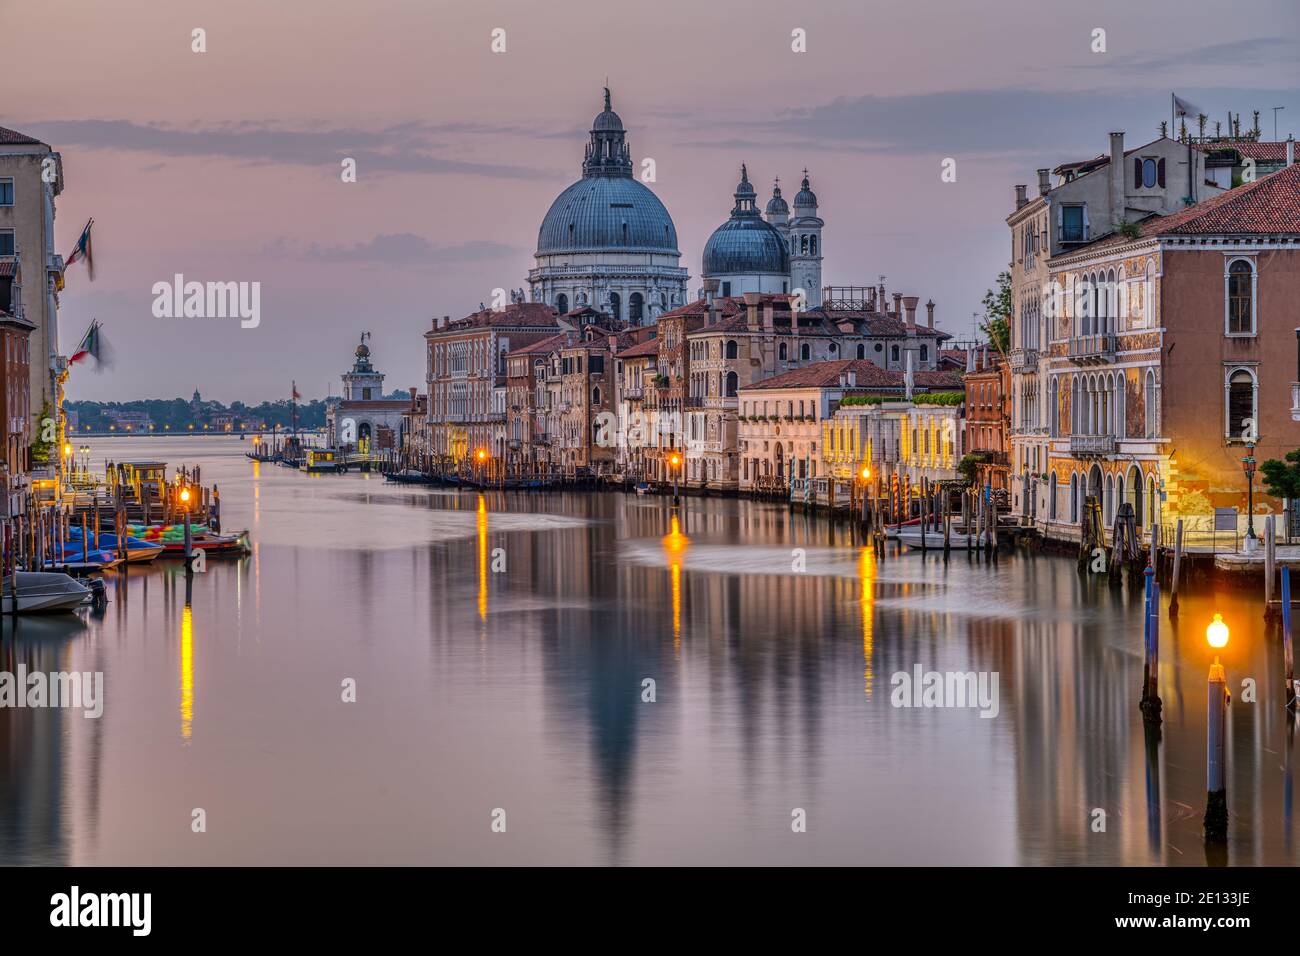 The Grand Canal and the Basilica Di Santa Maria Della Salute in Venice early in the morning Stock Photo